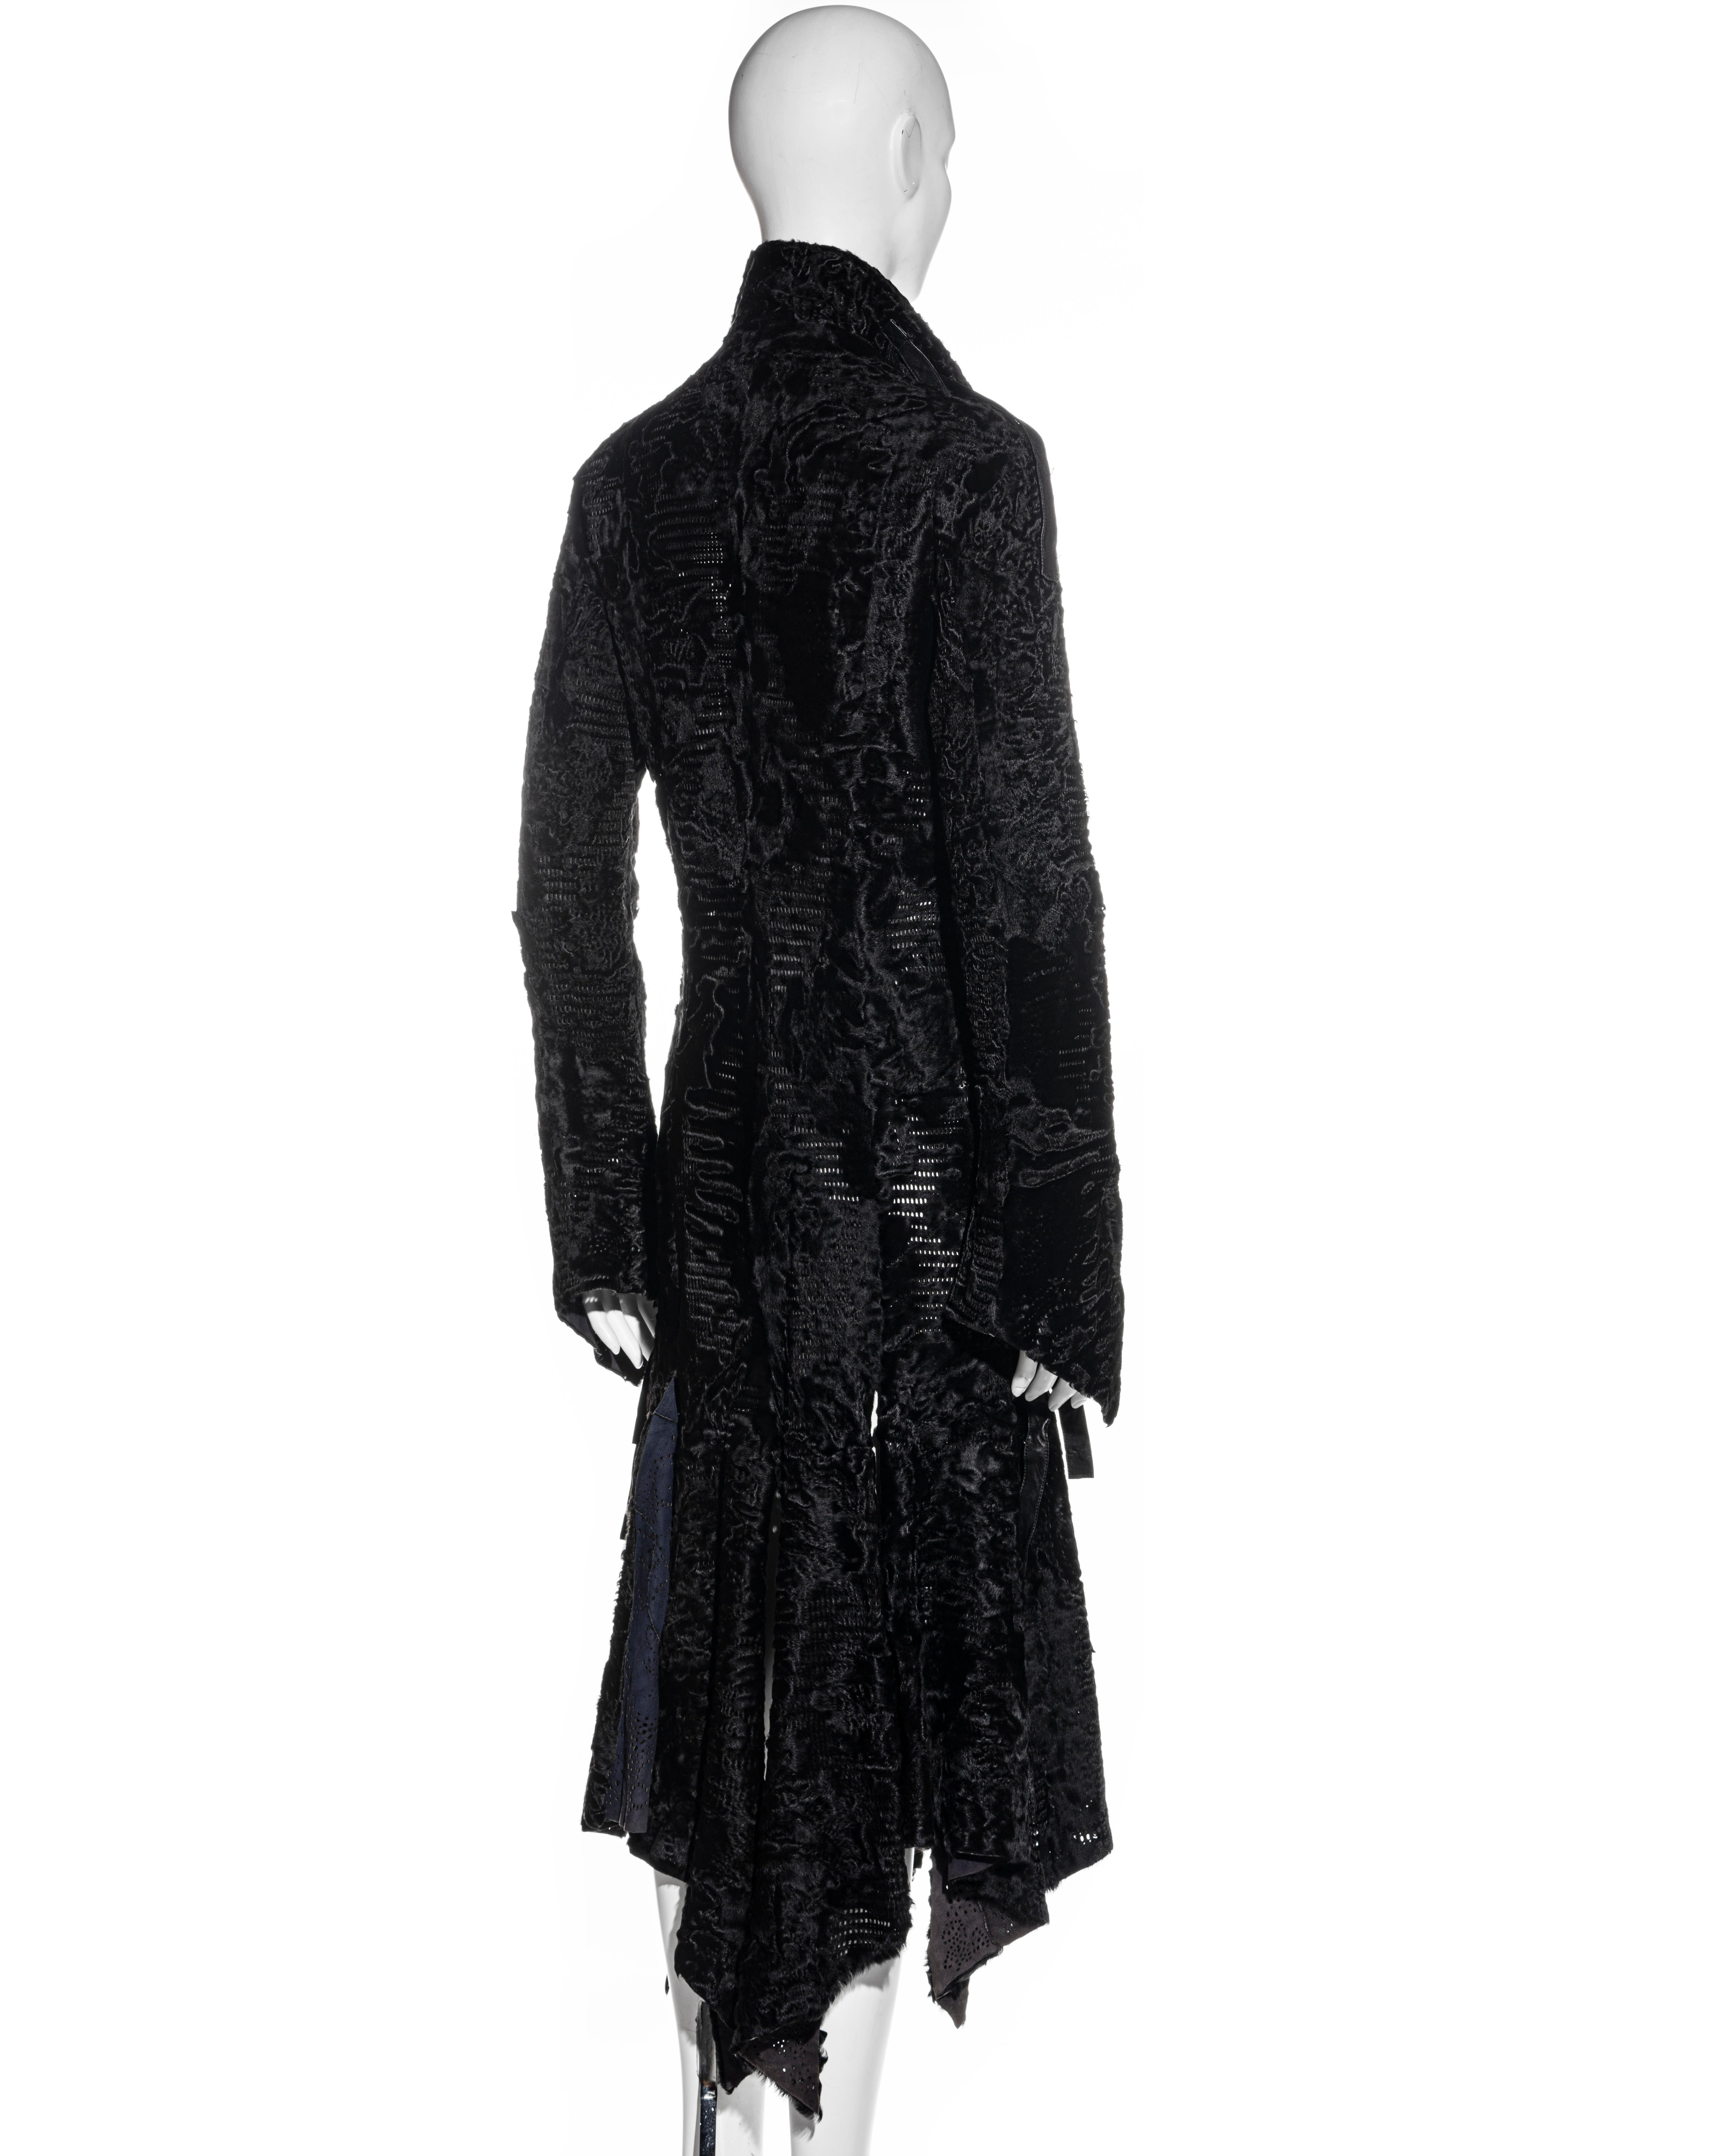 Versace black laser-cut lambskin coat with leather bondage straps, fw 2004 For Sale 2